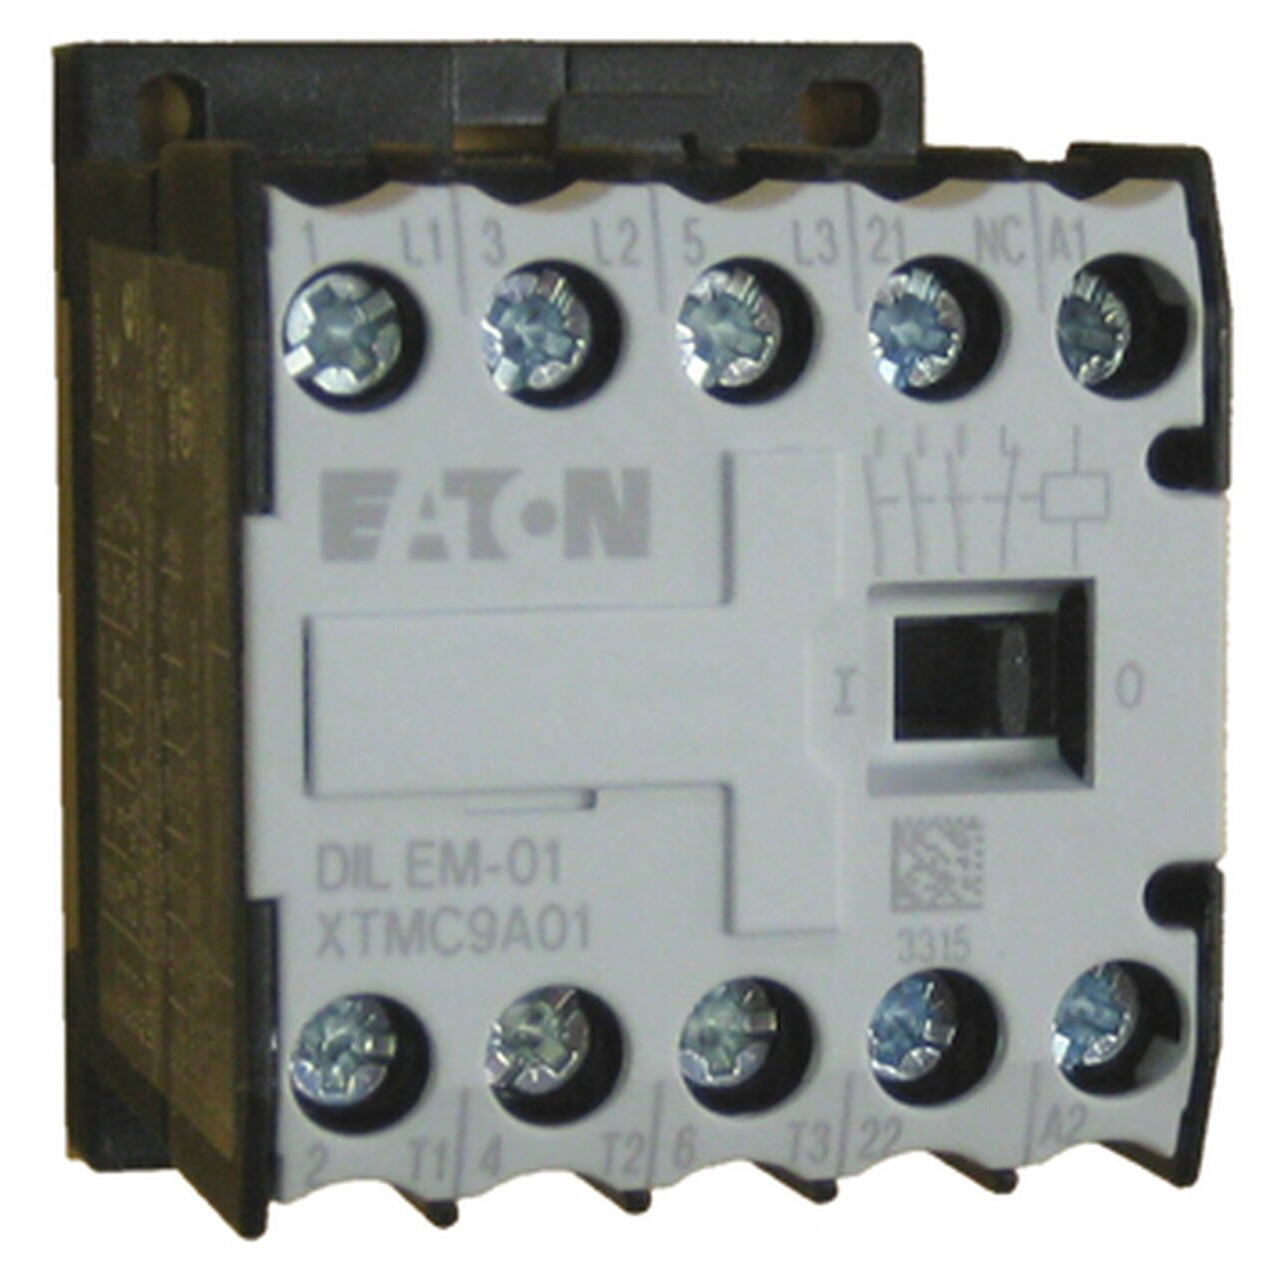 Eaton/Moeller DILEM-01 (208v60Hz) contactor